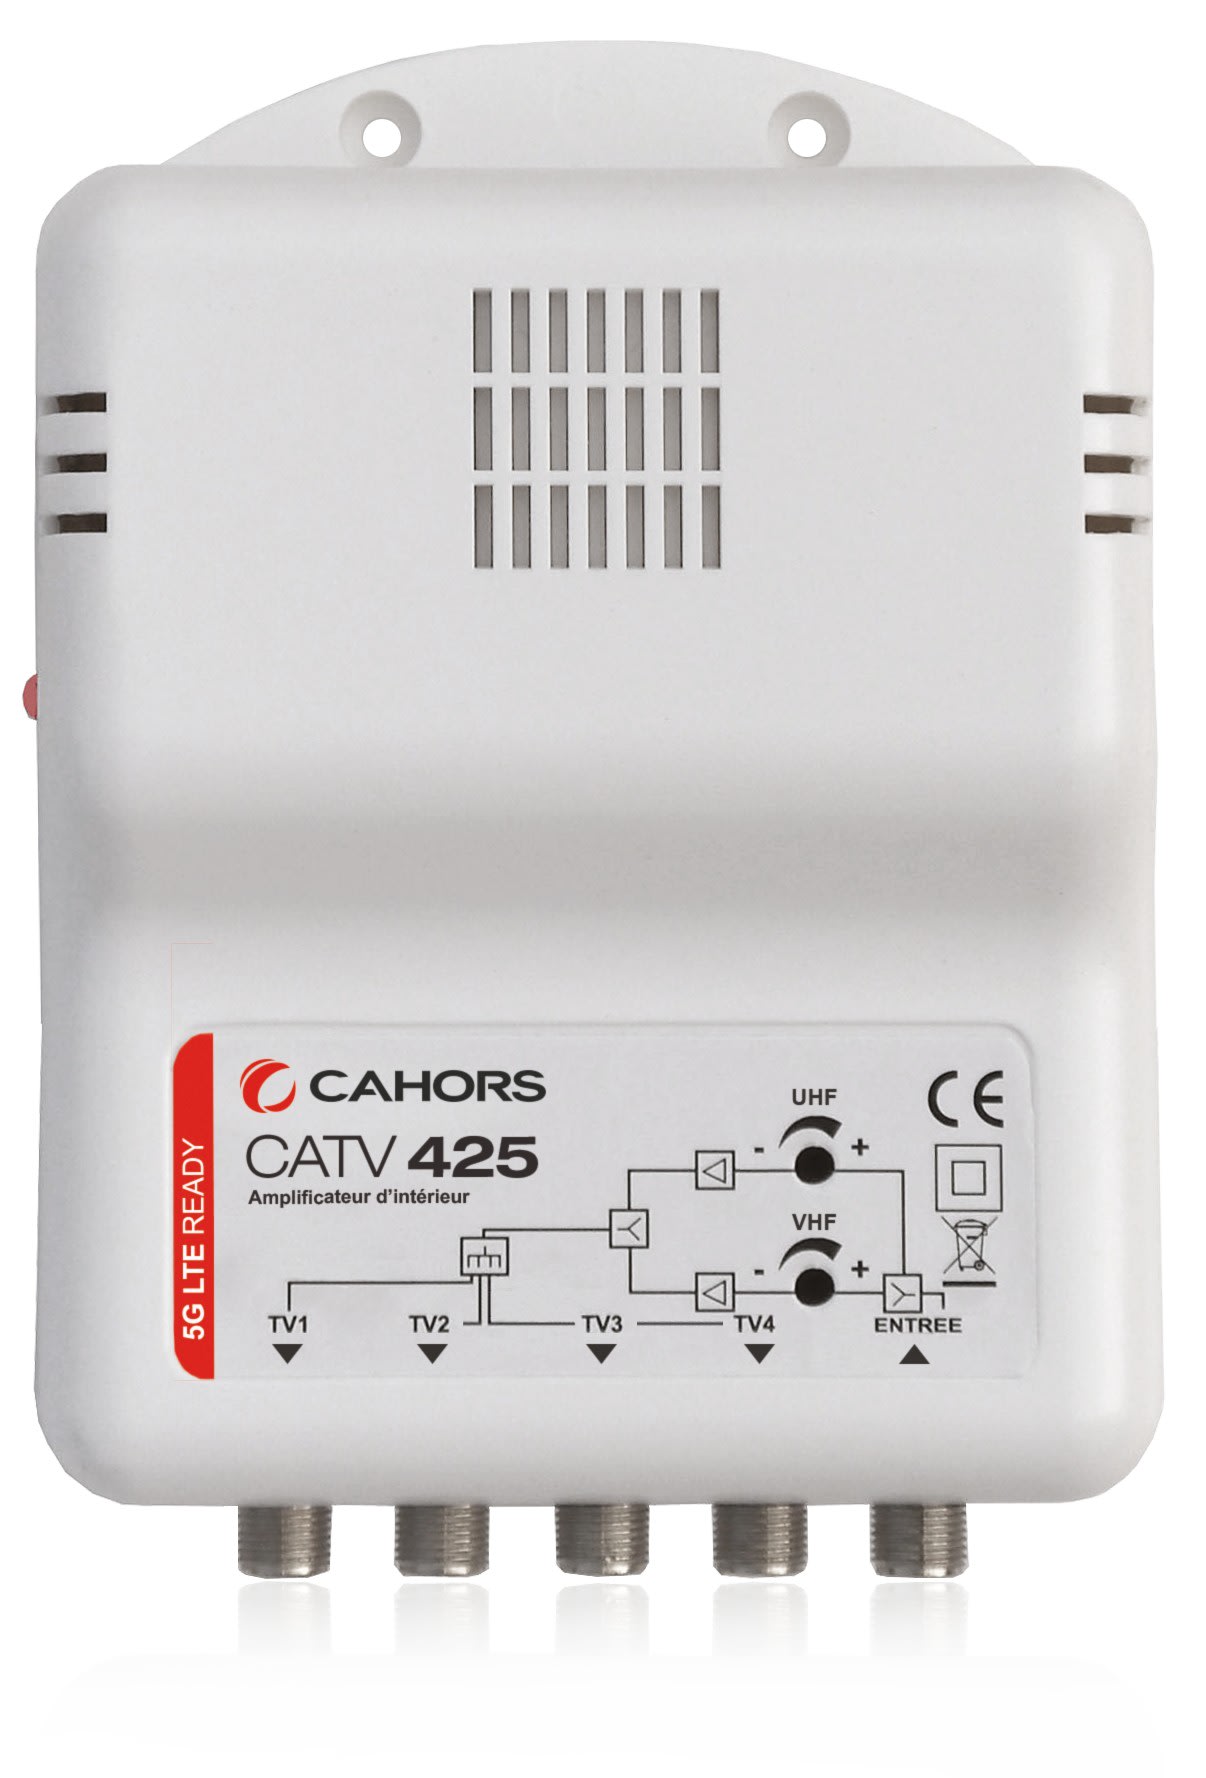 Cahors - Ampli 4 Sorties 5 a 25Db - Ns 105Dbuv Avec Controles De Gains Separes Vhf-Uhf